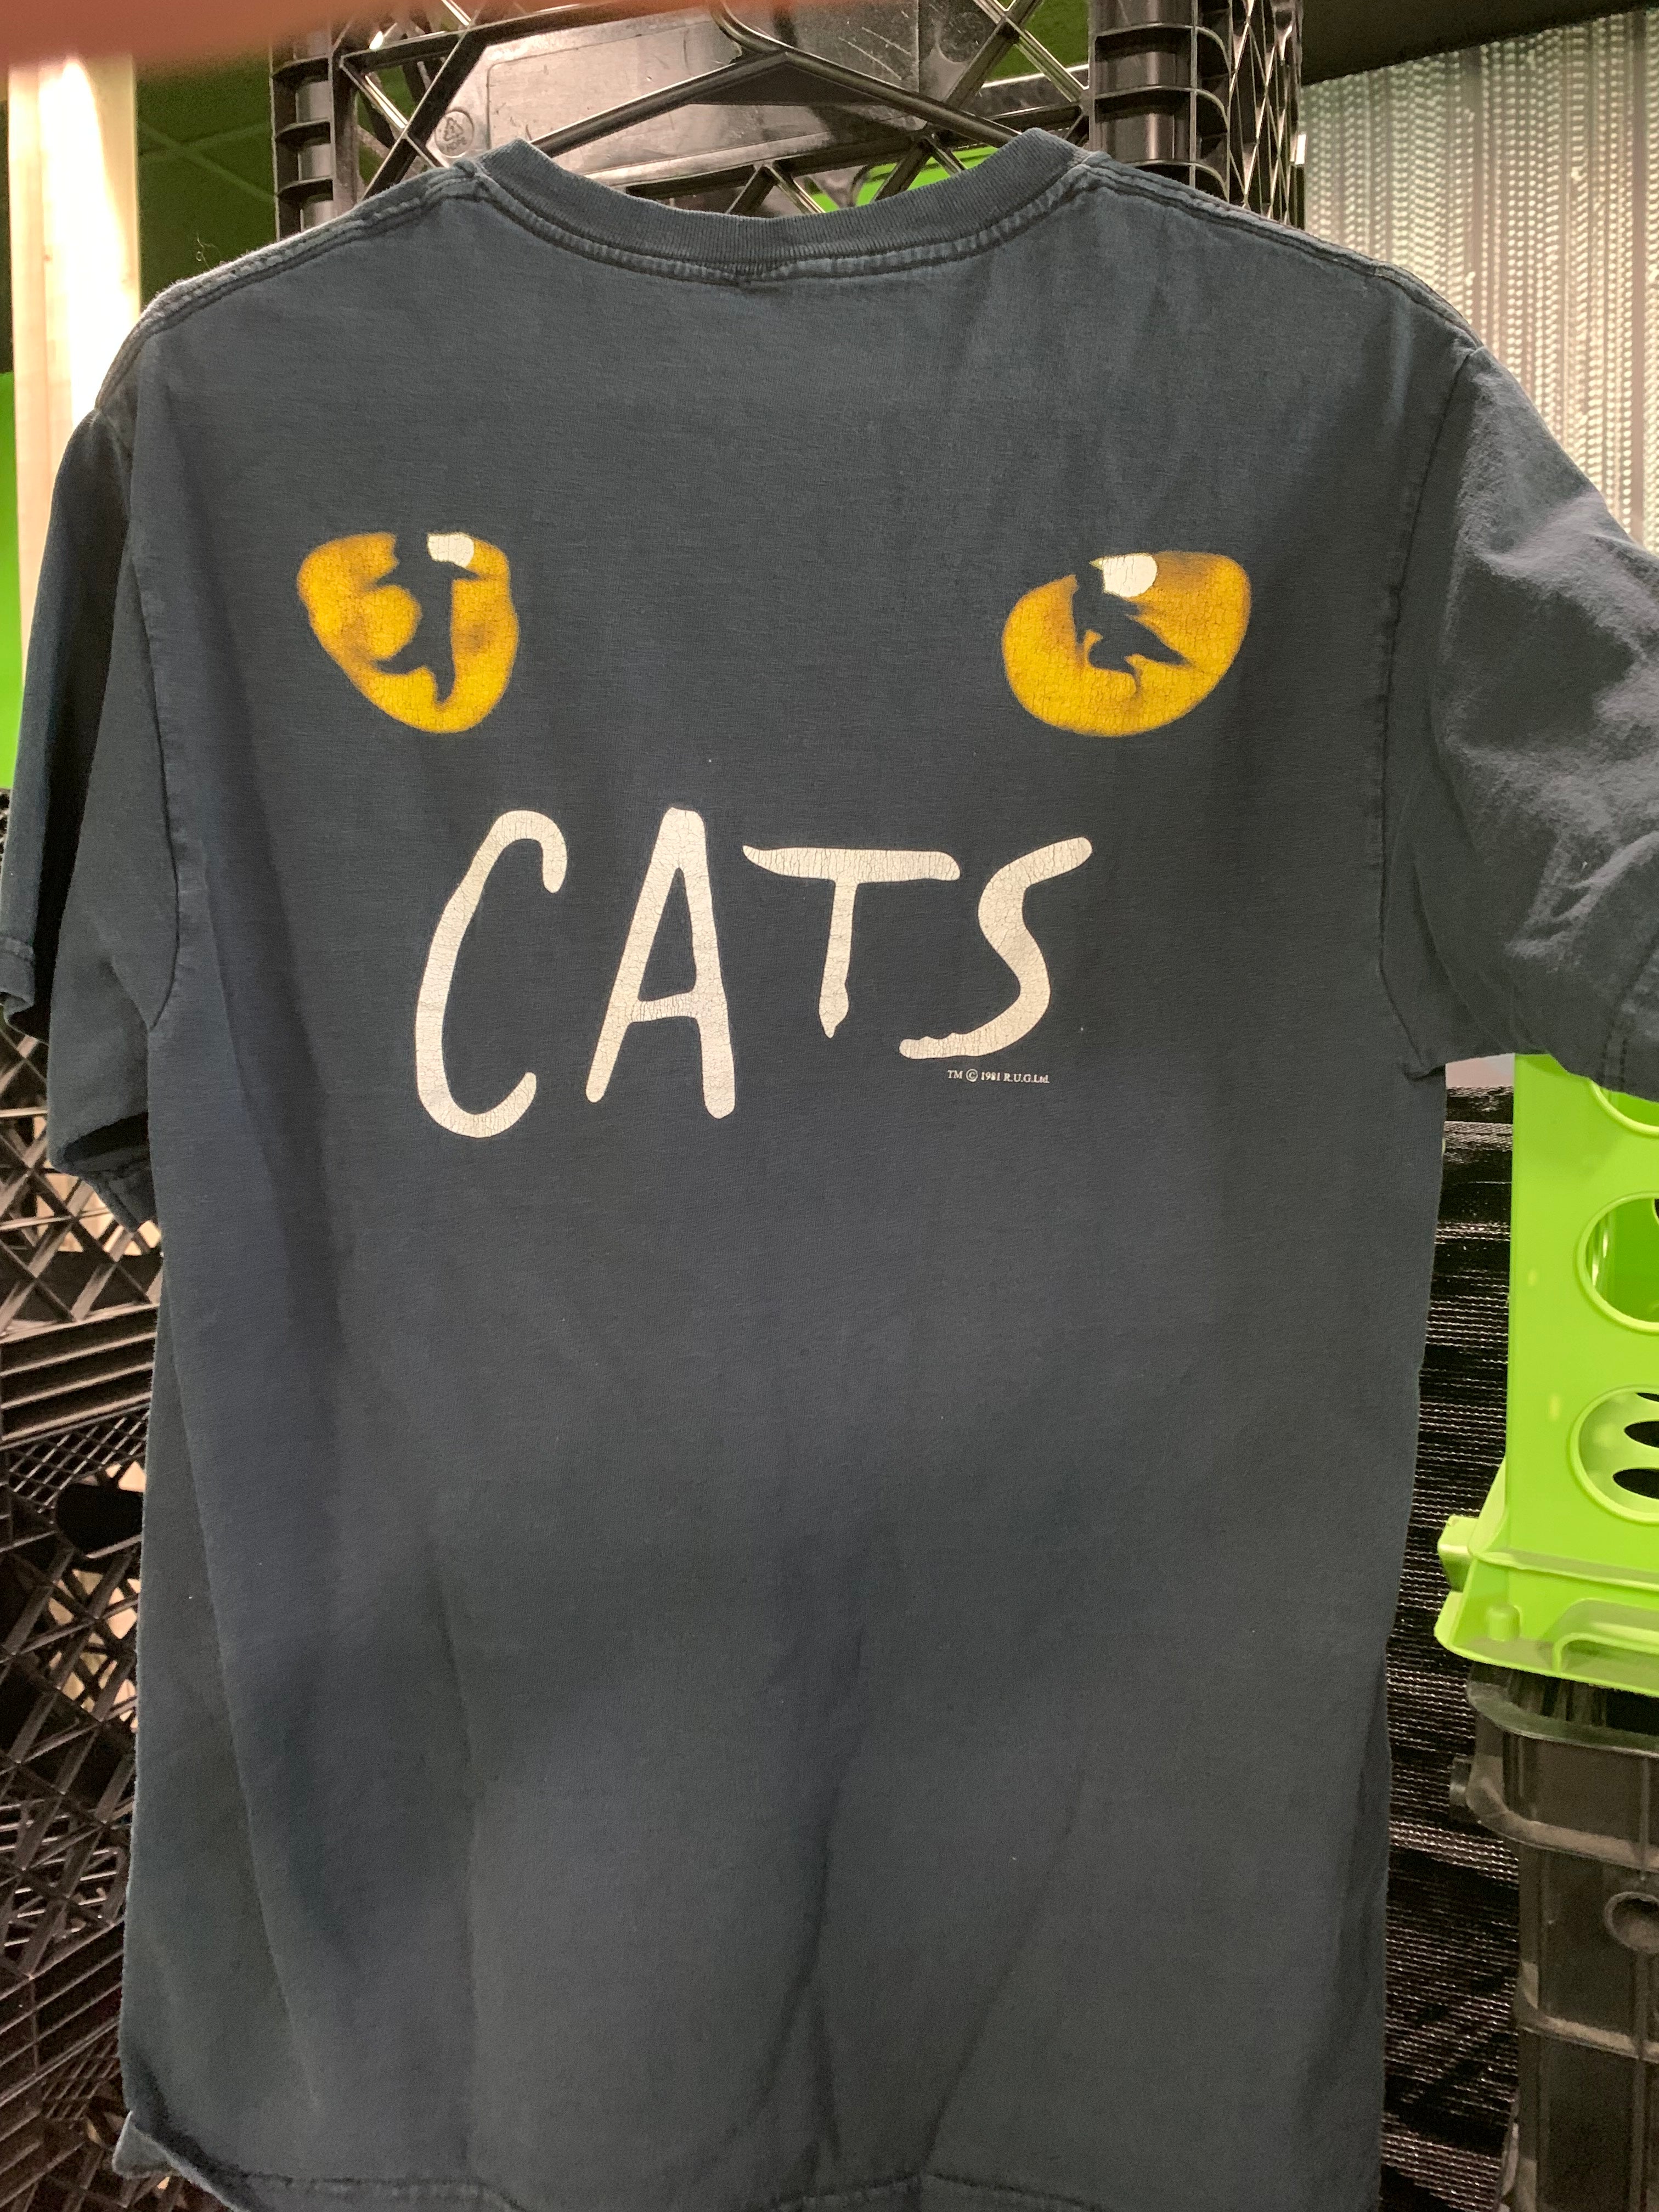 Cats The Musical 1981 T-Shirt, Gray, M